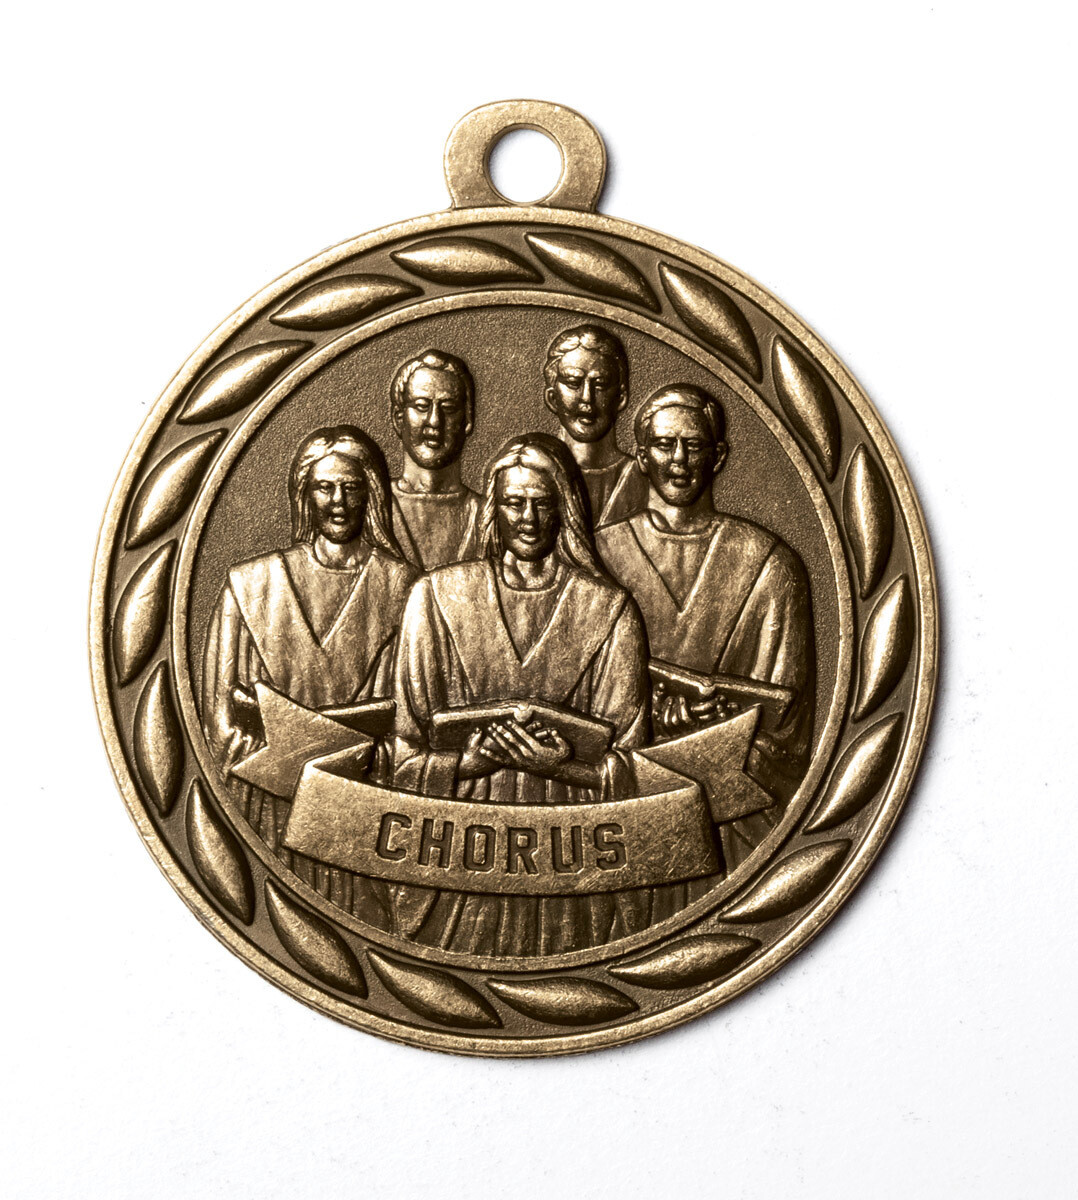 Scholastic Medal Series
CHORUS AWARD